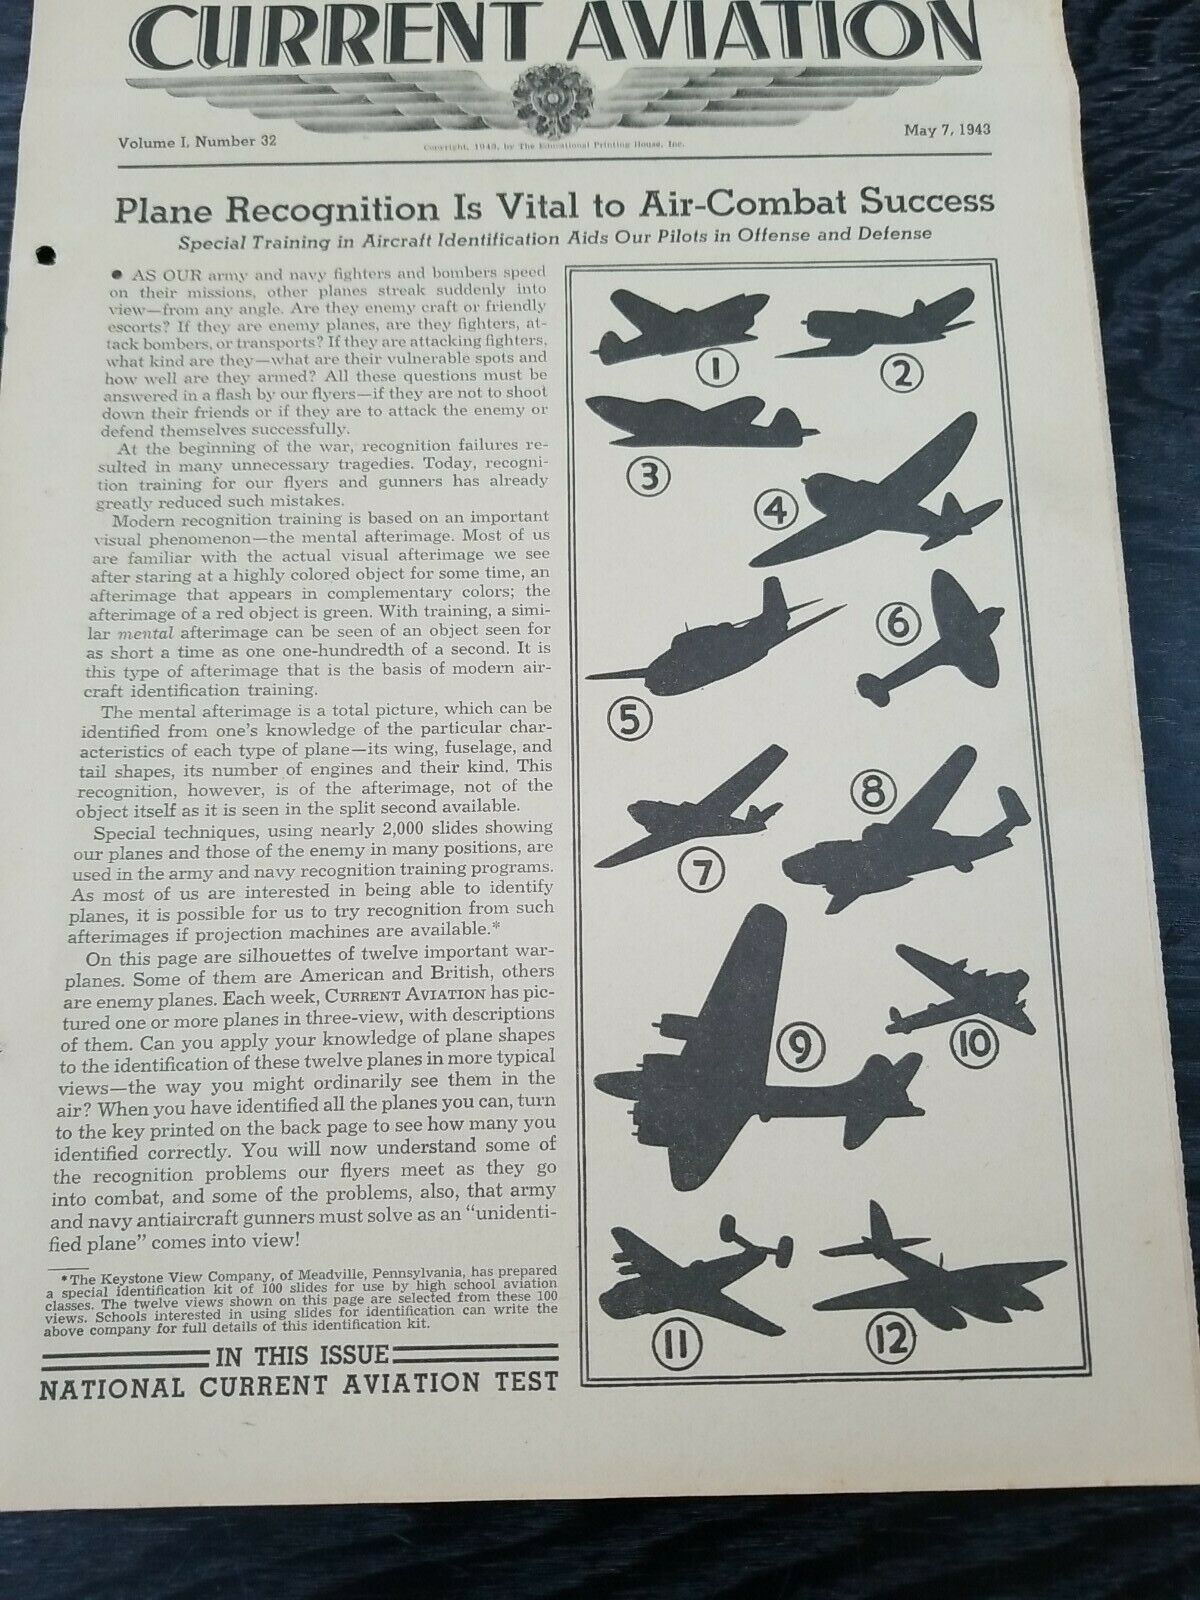 1943 Ww2 Current Aviation Magazine 05/07/43 Vol. 1 #32 National Aviation Test